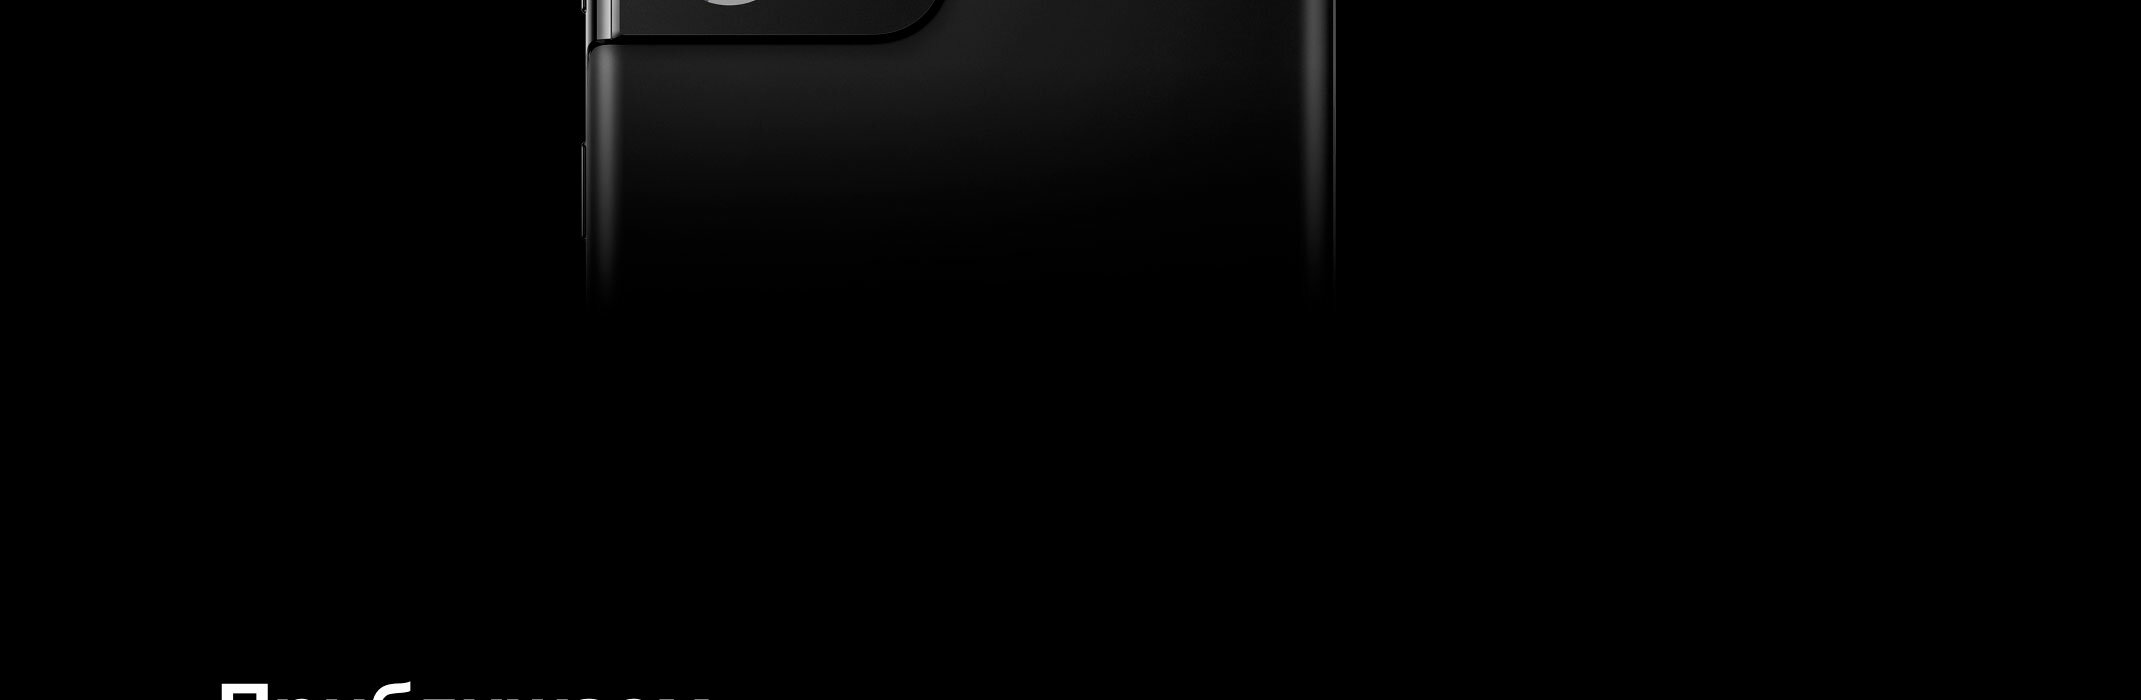 Samsung Galaxy S21 Ultra - paragraf.uz